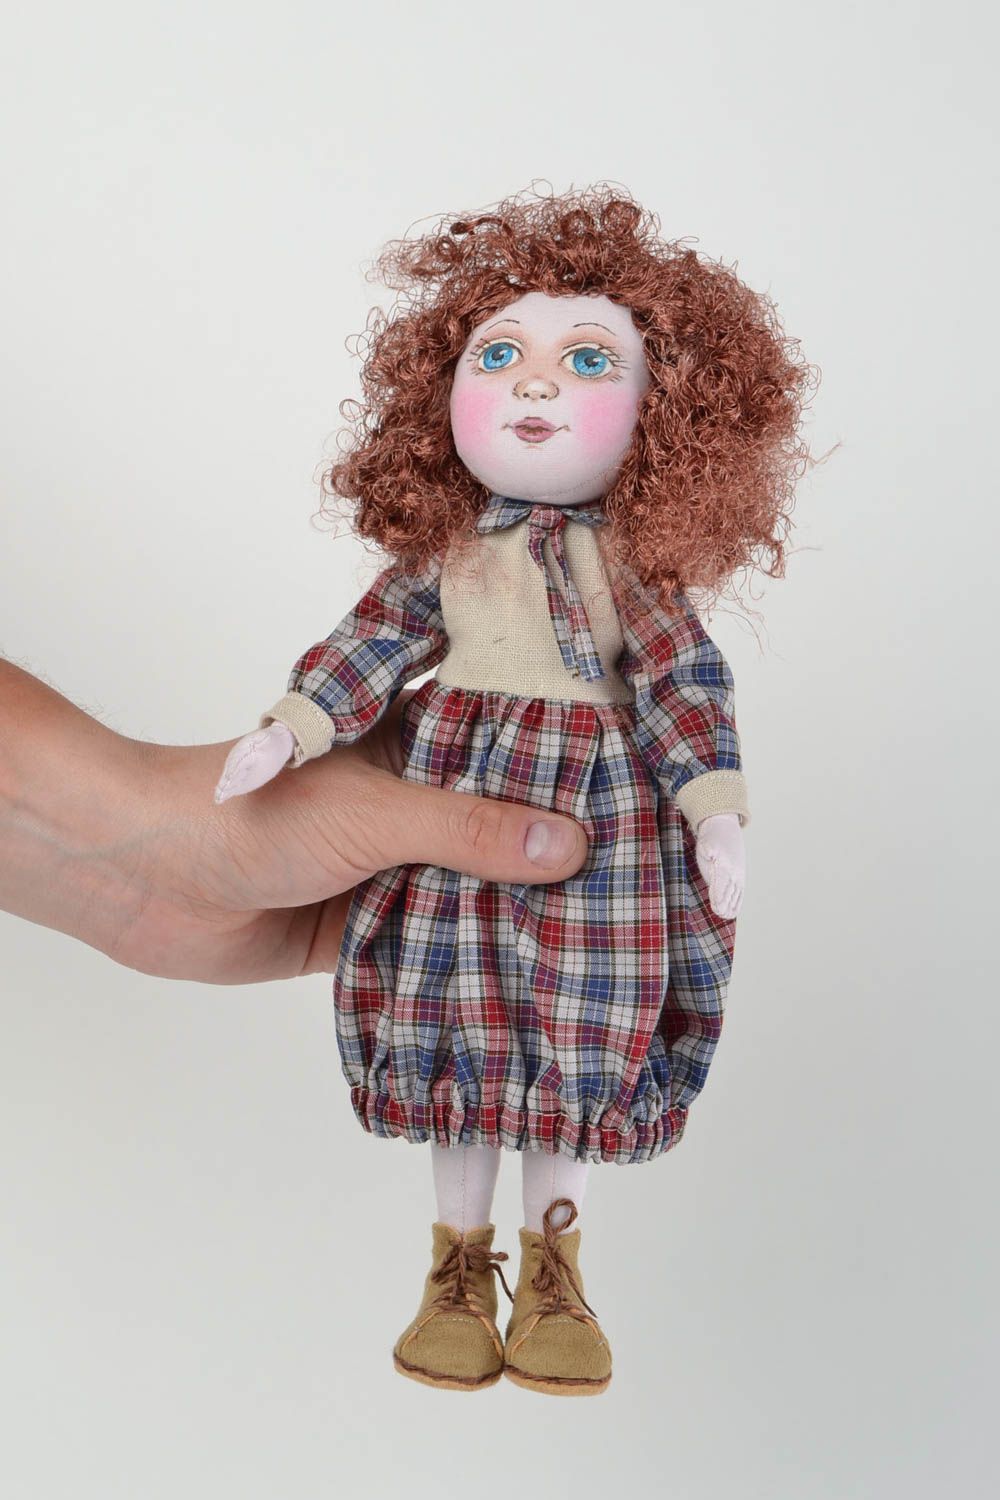 Interior decorative doll for children fabric soft handmade toy Yanochka photo 2